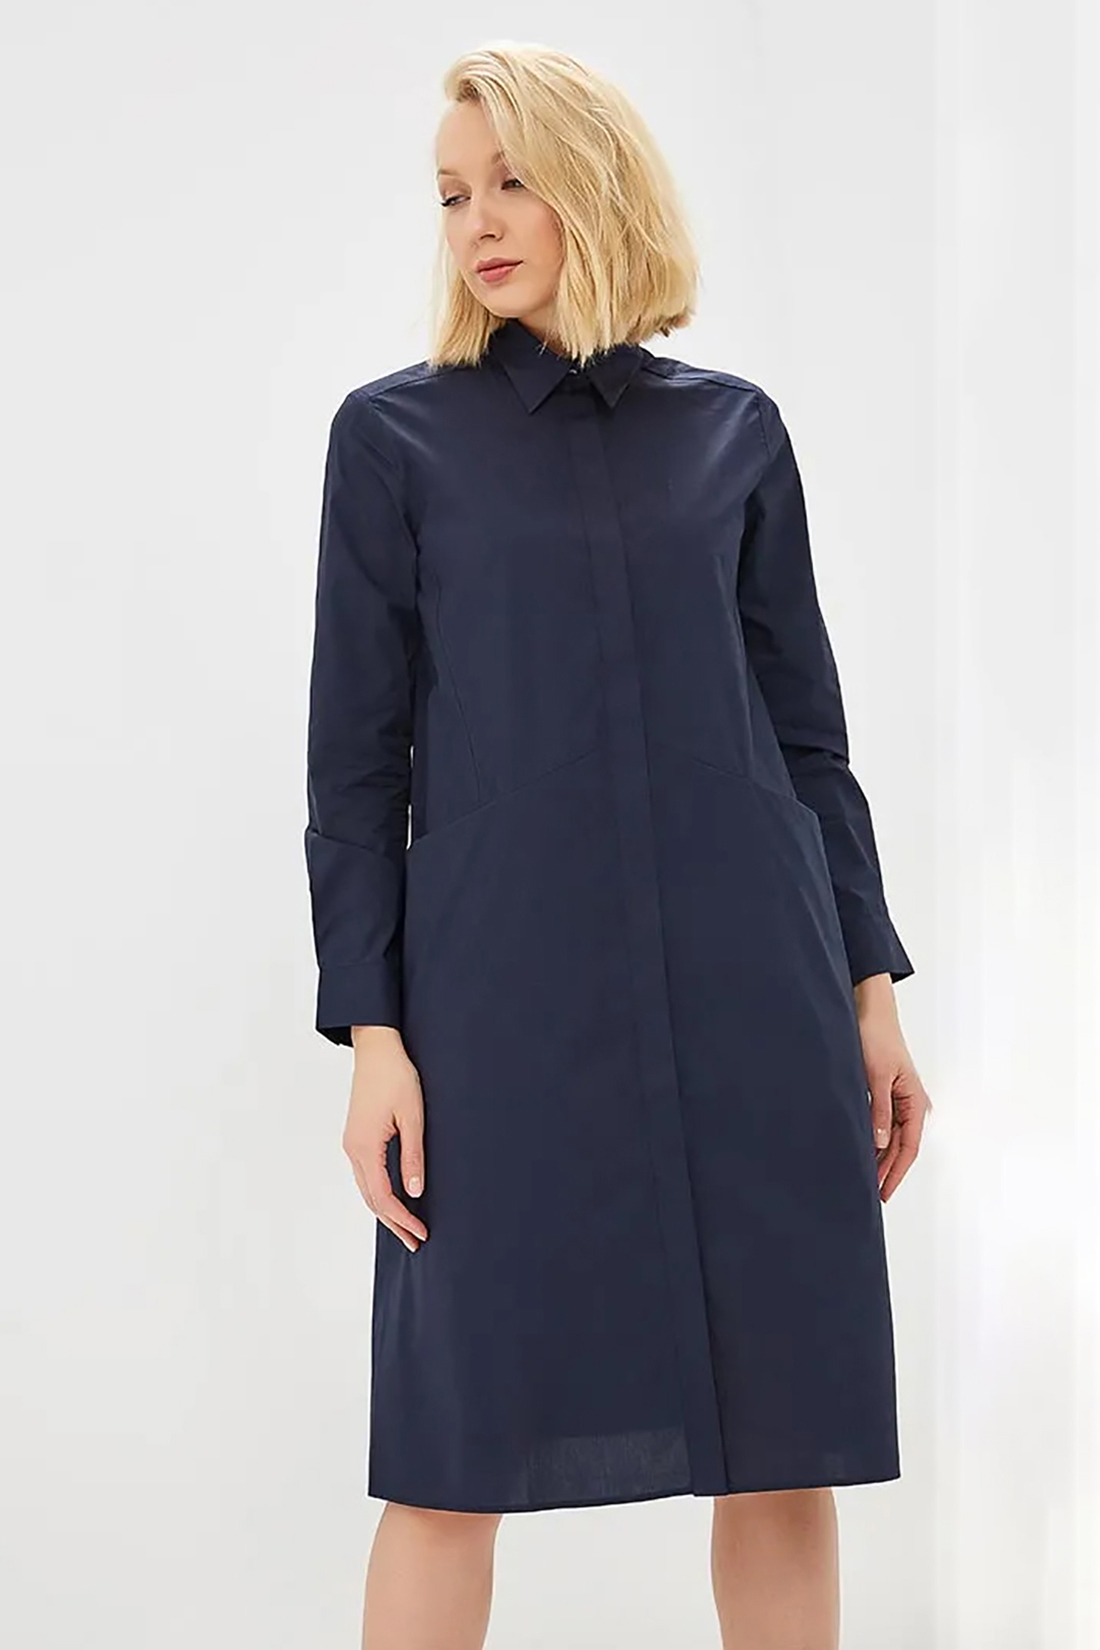 Платье-рубашка оригинального кроя (арт. baon B459007), размер S, цвет синий Платье-рубашка оригинального кроя (арт. baon B459007) - фото 3